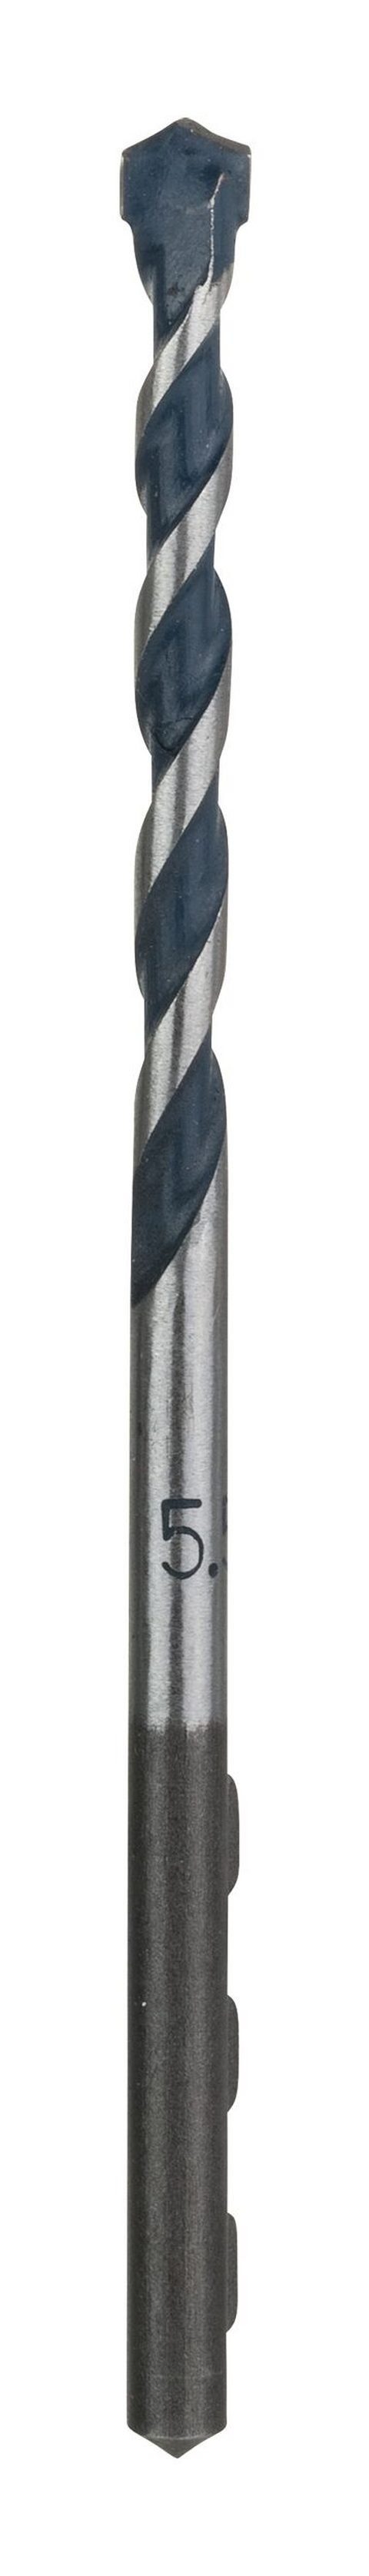 BOSCH Steinbohrer, CYL-5 (Blue Granite) Betonbohrer - 5,5 x 50 x 100 mm - 1er-Pack | Bohrer